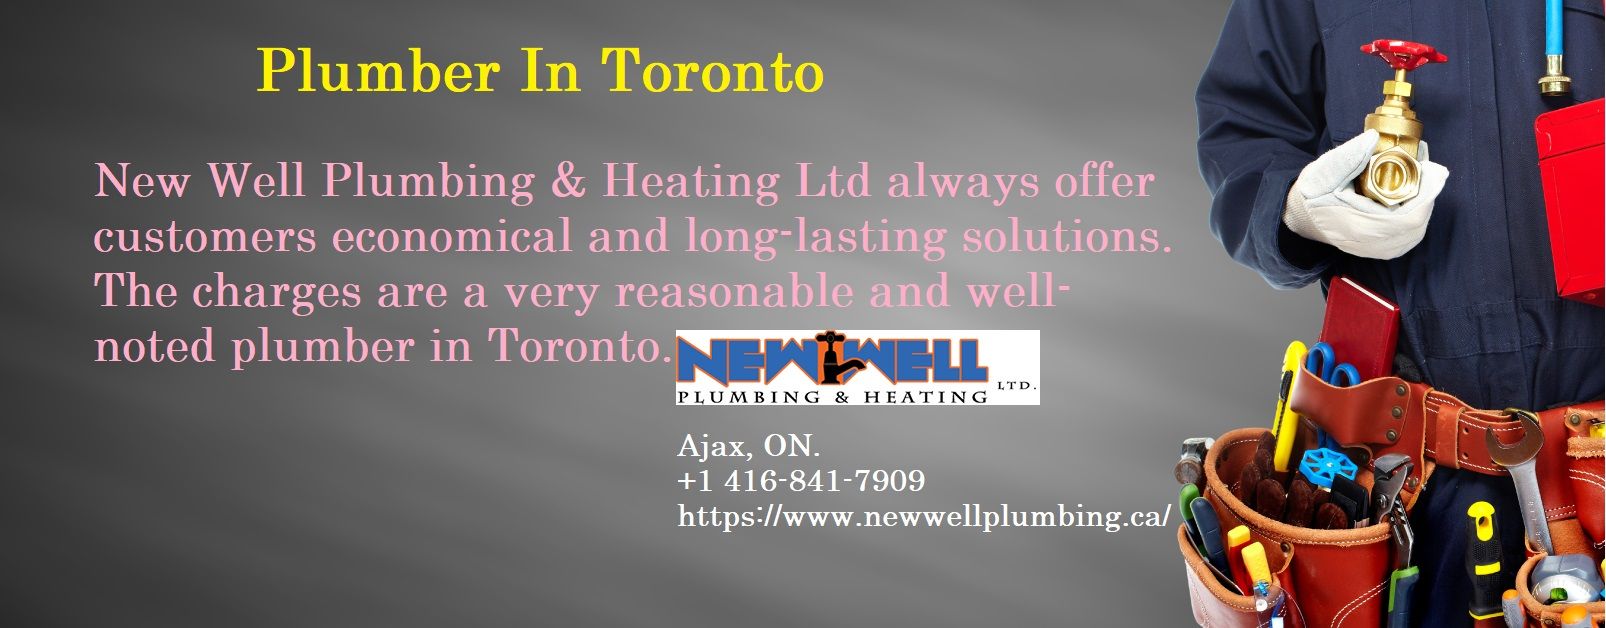 Plumber In Toronto | New Well Plumbing & Heating Ltd